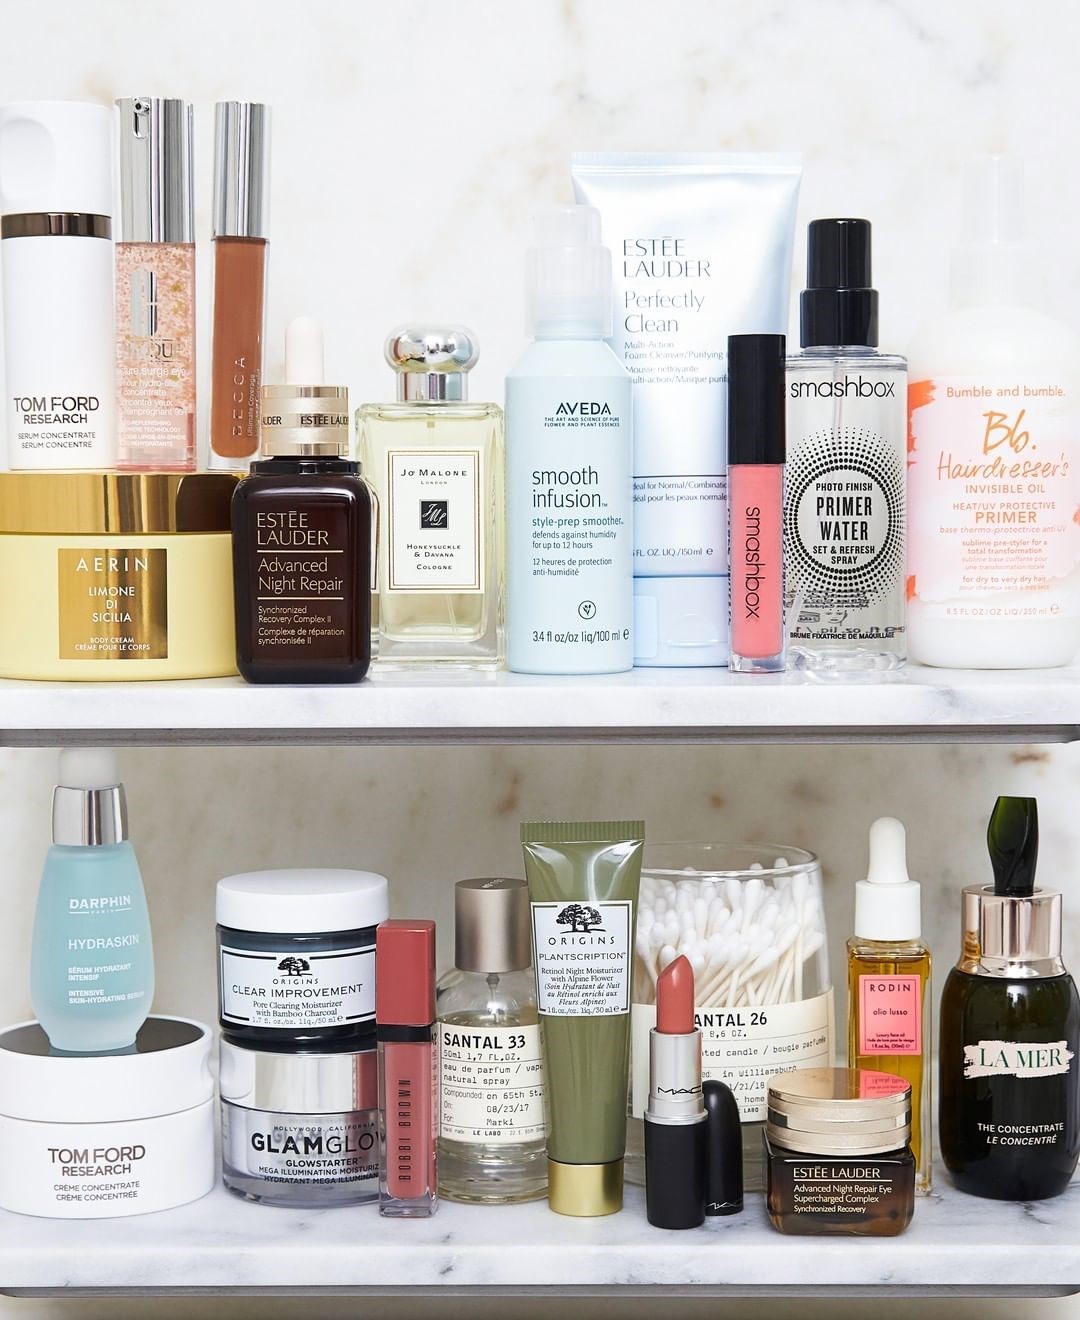 Estee Lauder heir joins world's 500 richest amid cosmetics boom